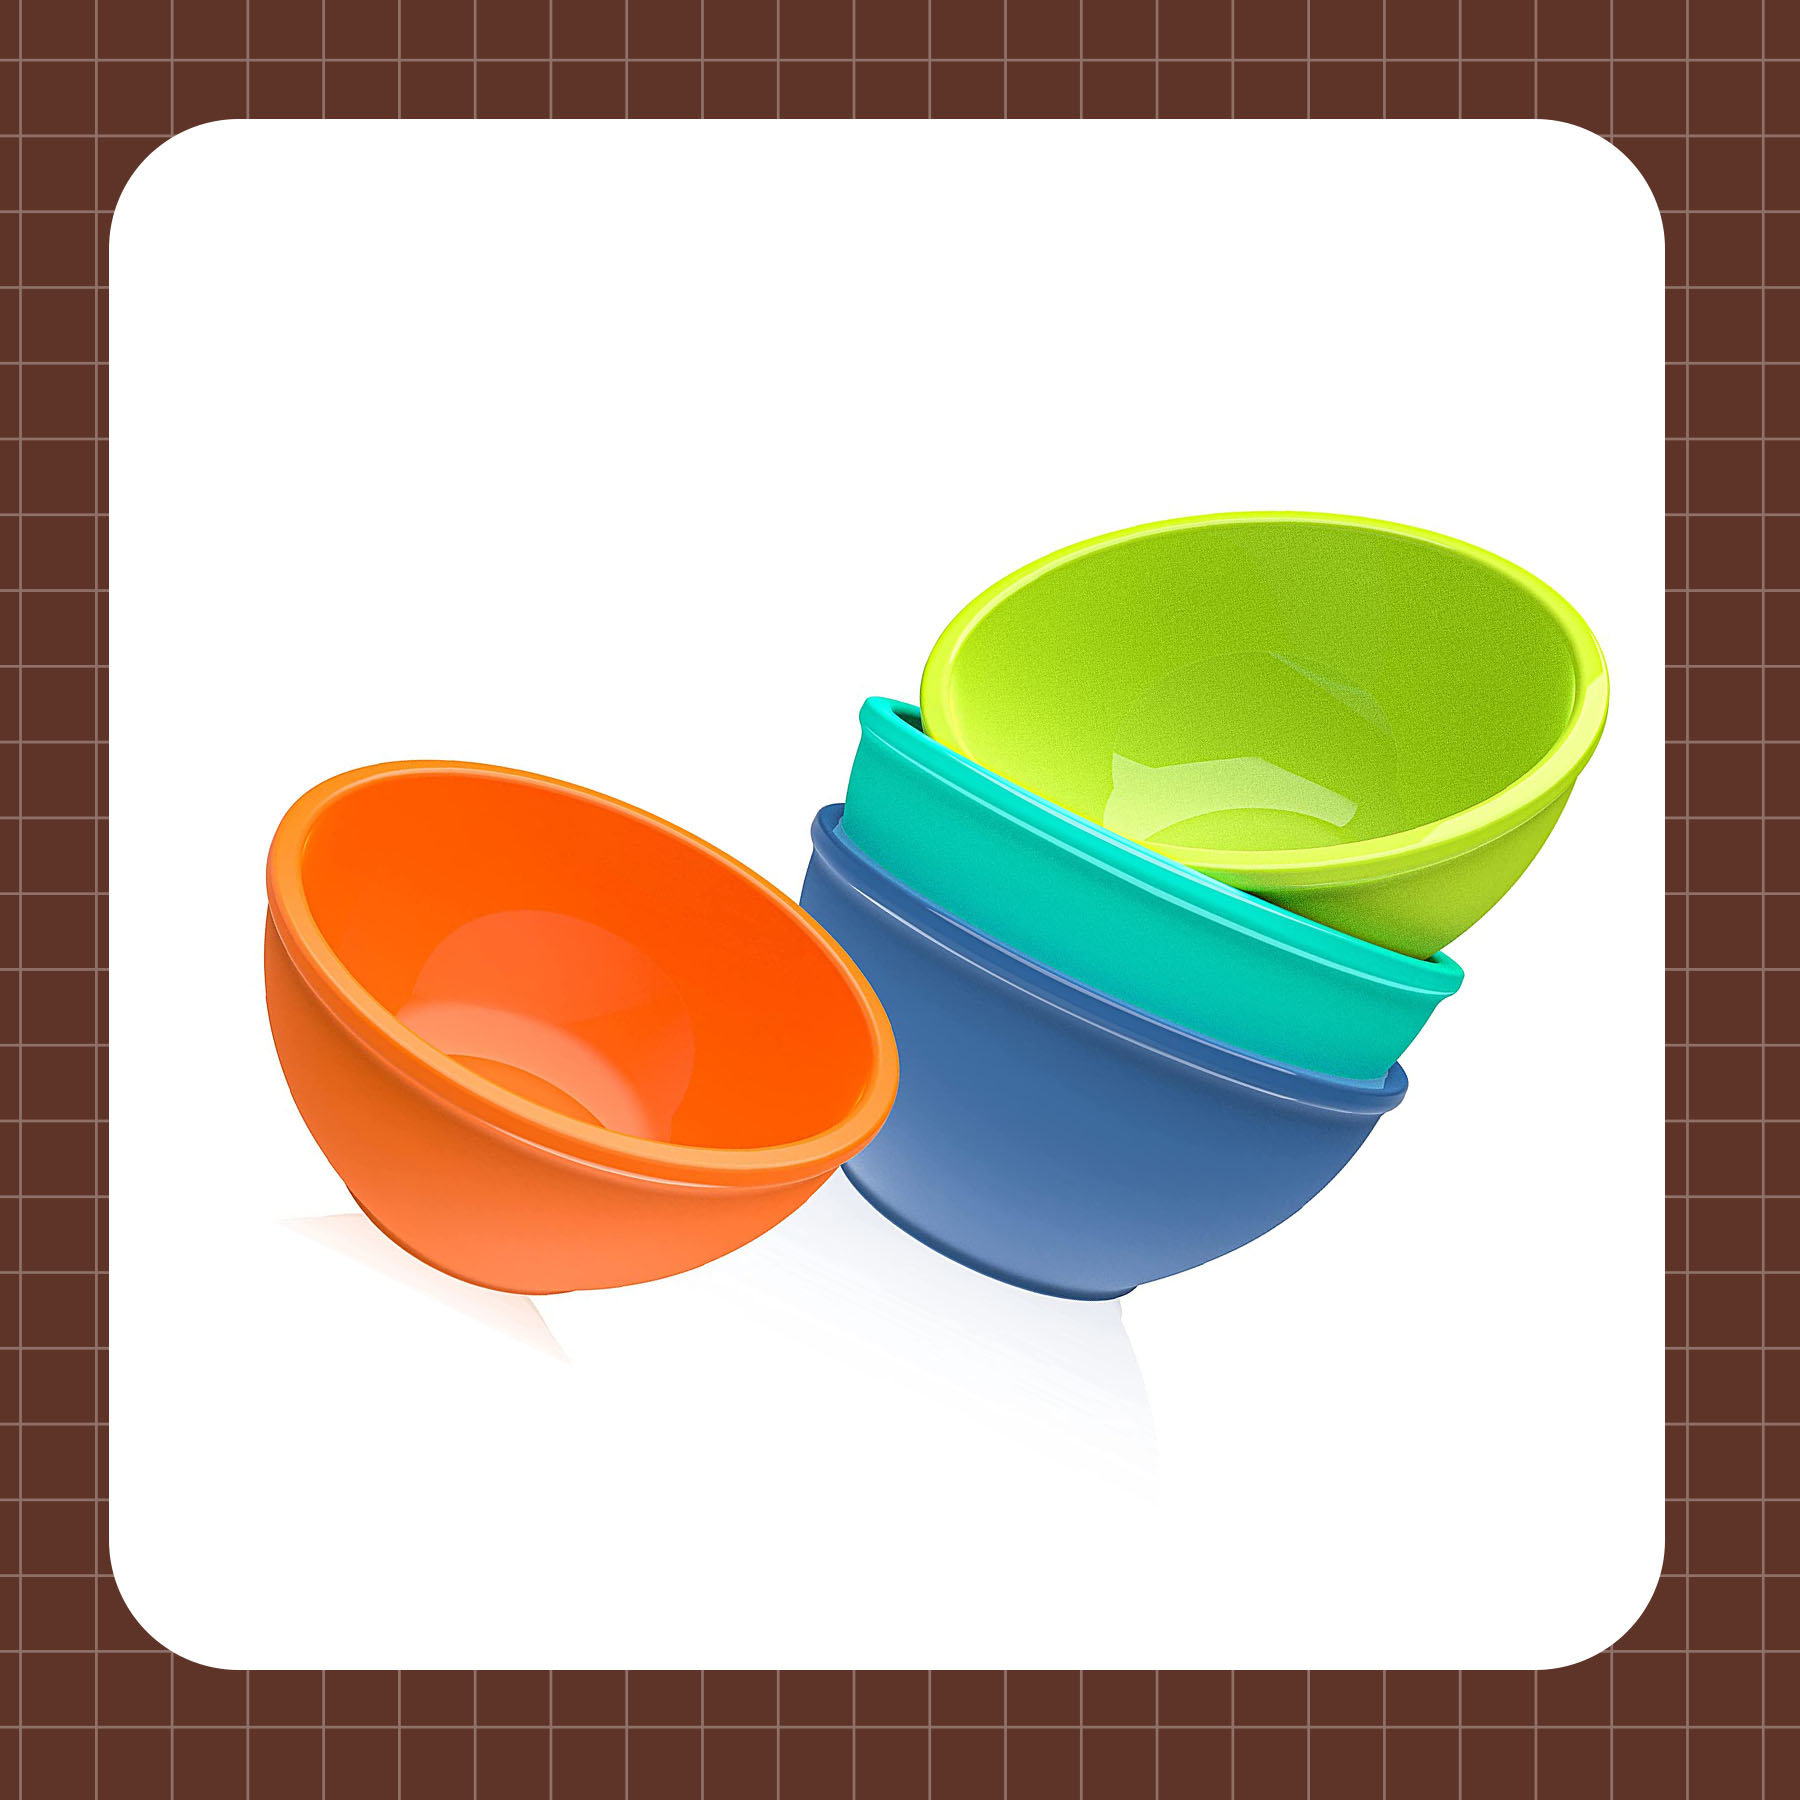 Blue Bowls 4 Pack 6 BPA-FREE Lightweight Picnic Bowl FREE SHIPPING